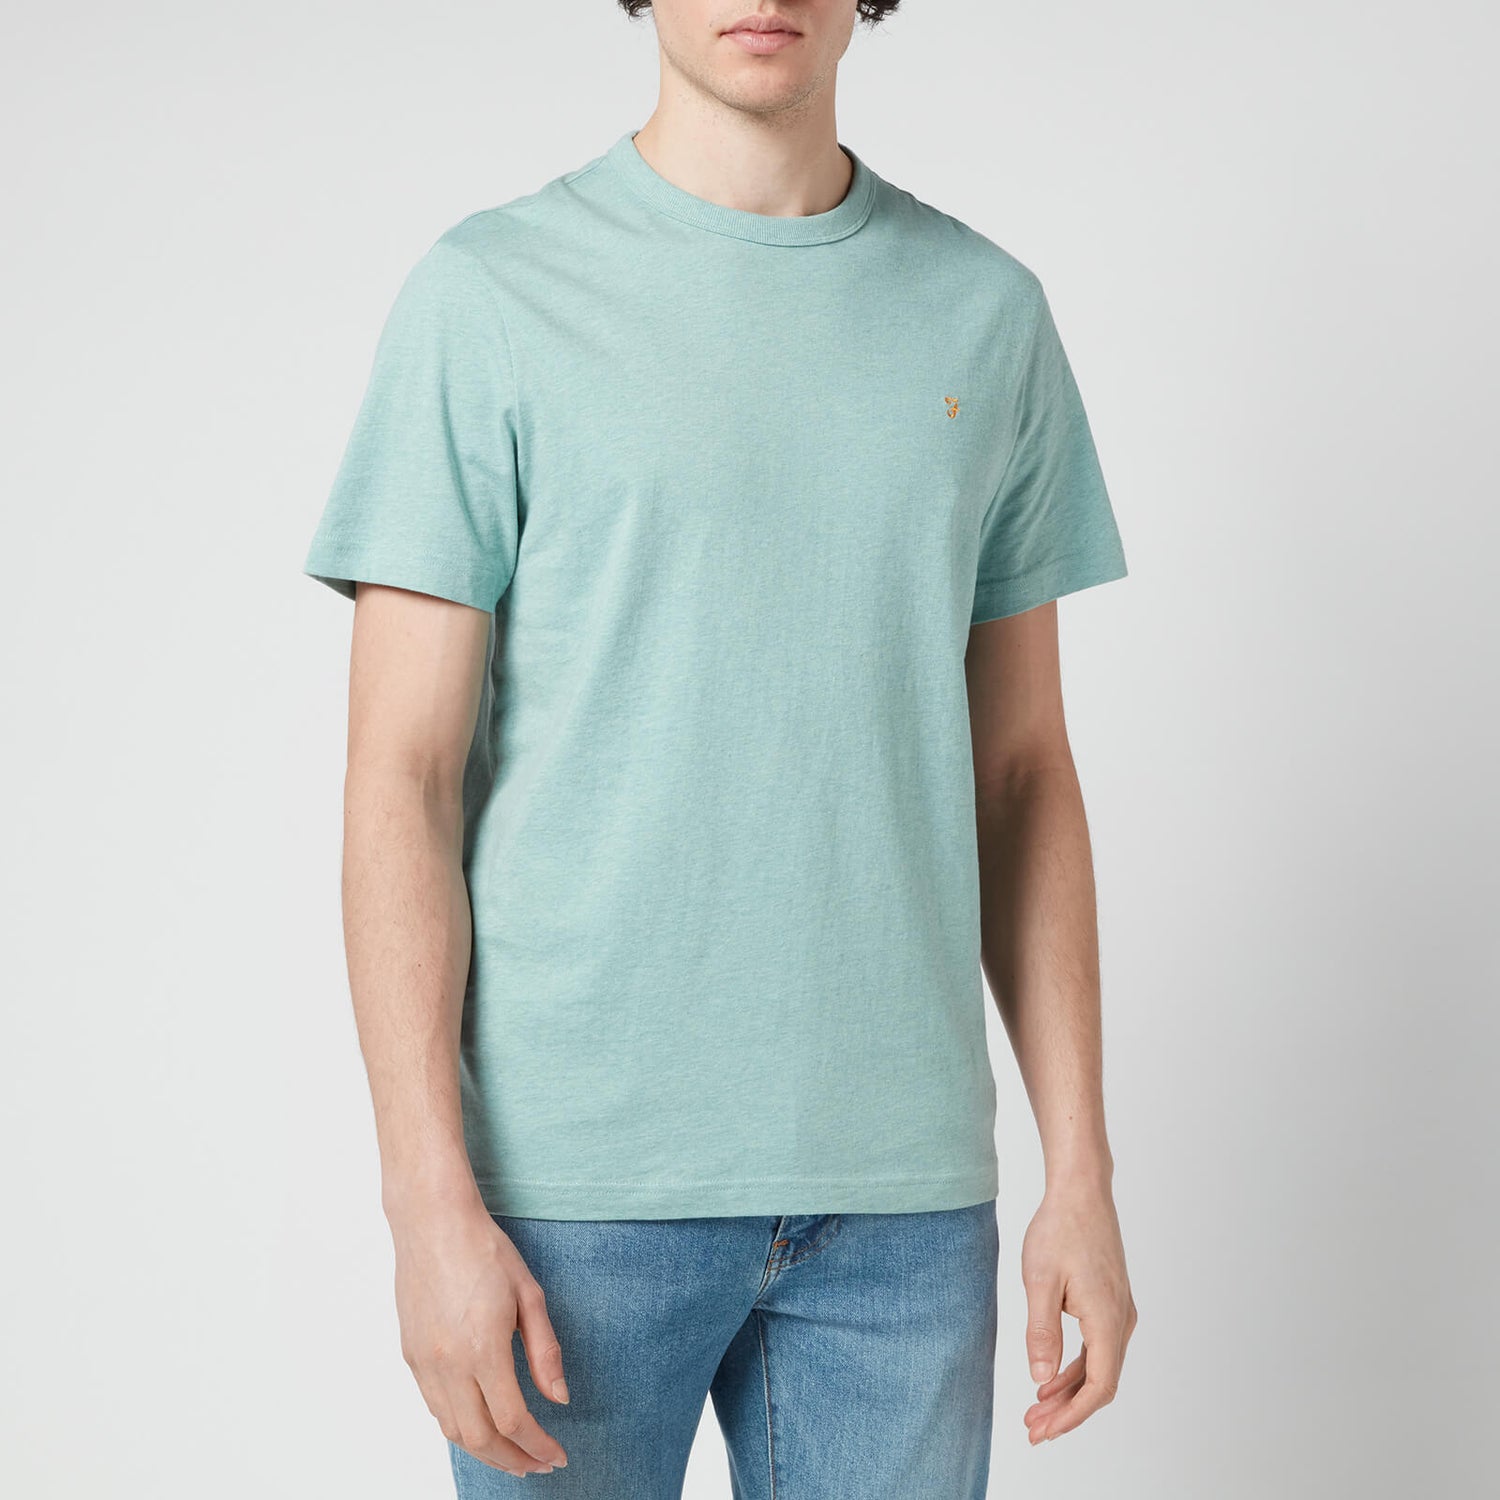 Farah Men's Danny T-Shirt - Marine Green Marl - S